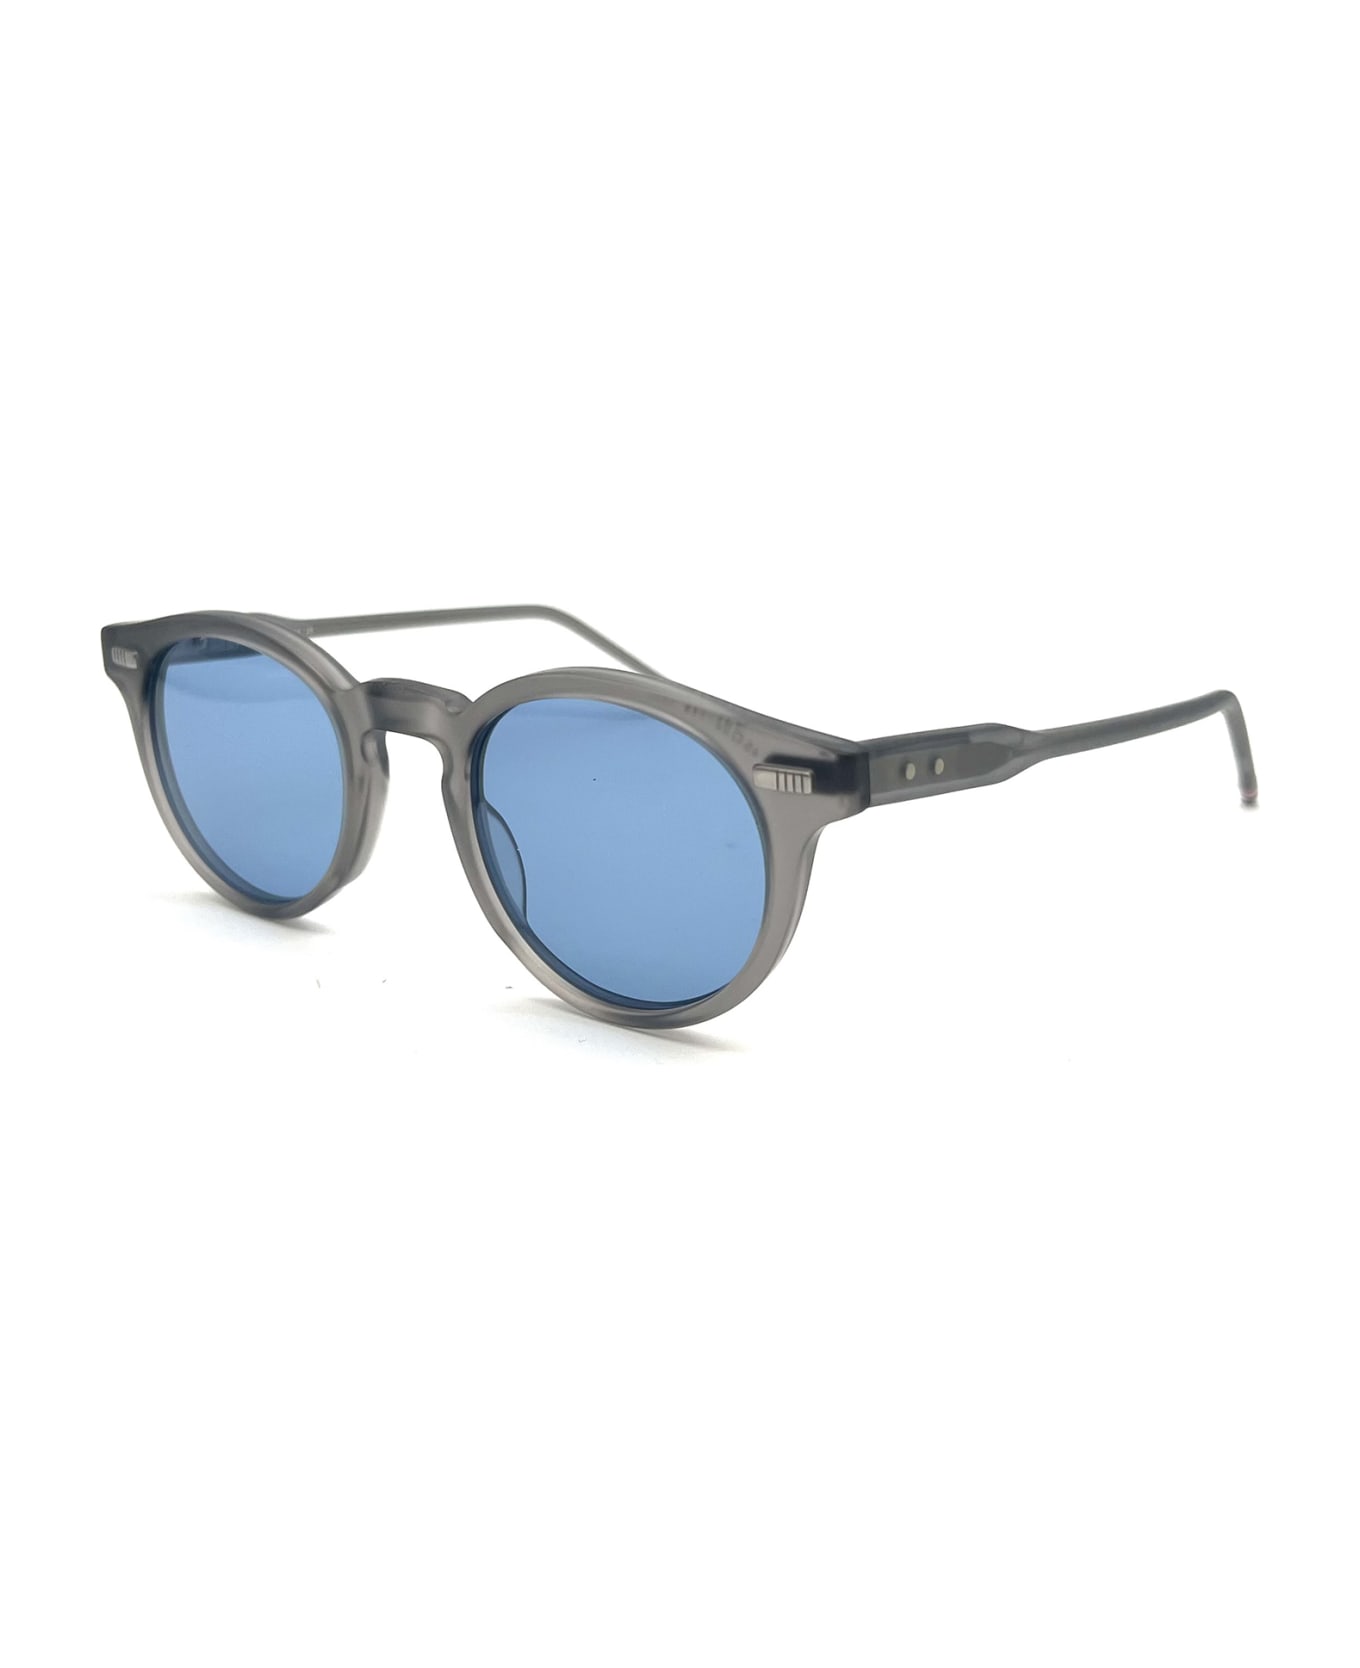 Thom Browne UES404A/G0002 Sunglasses - Light Grey